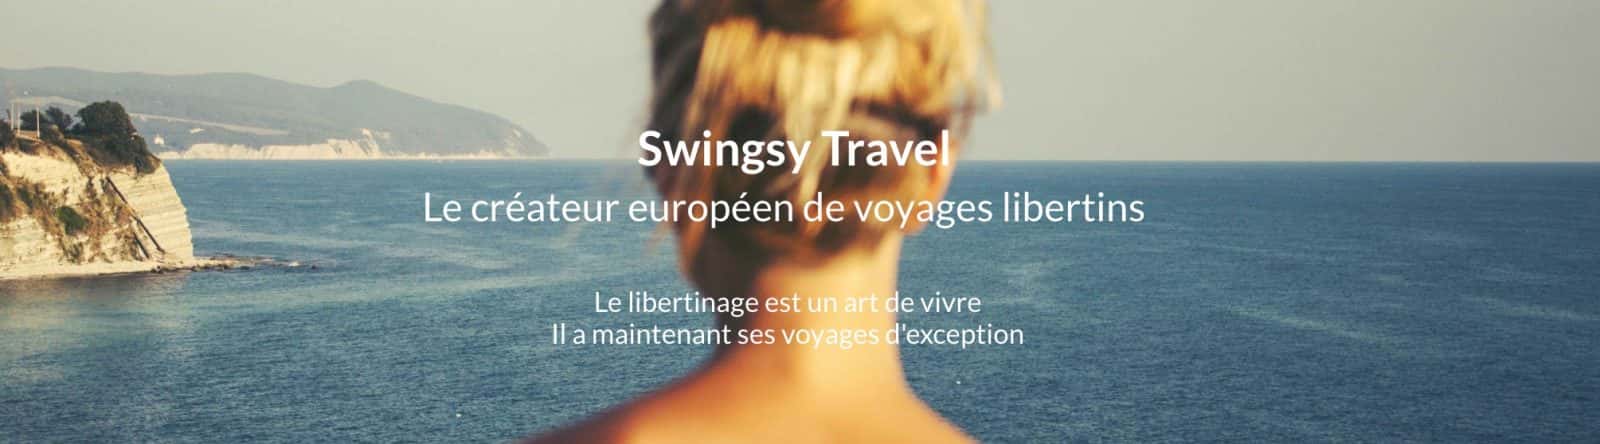 Swingsy Agence de voyages libertine - NXPL